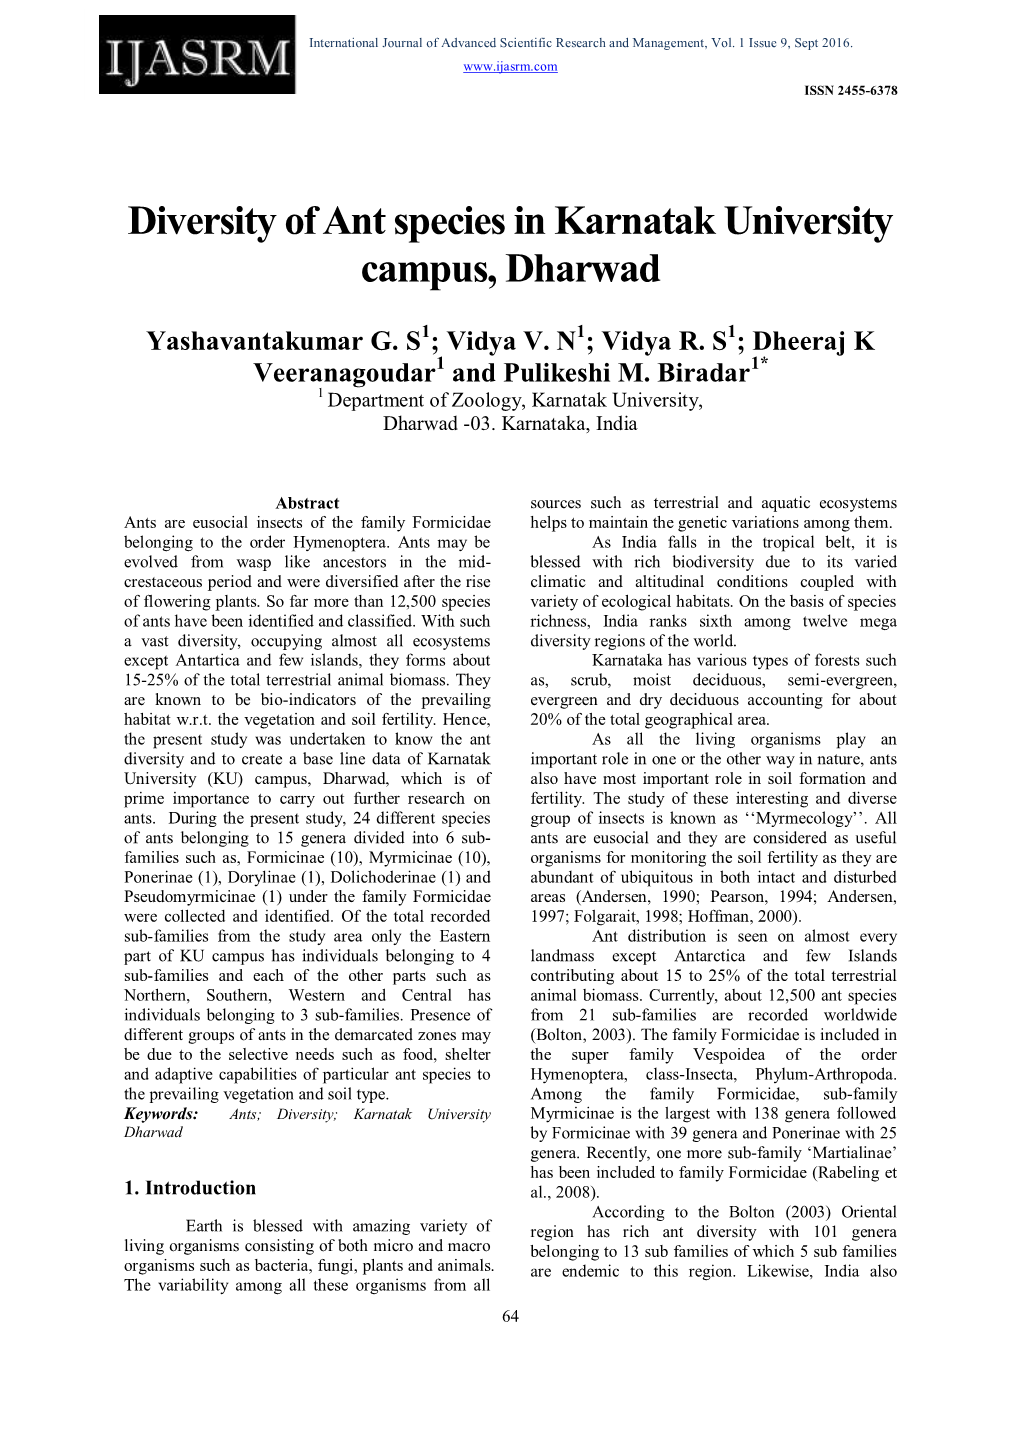 Diversity of Ant Species in Karnatak University Campus, Dharwad